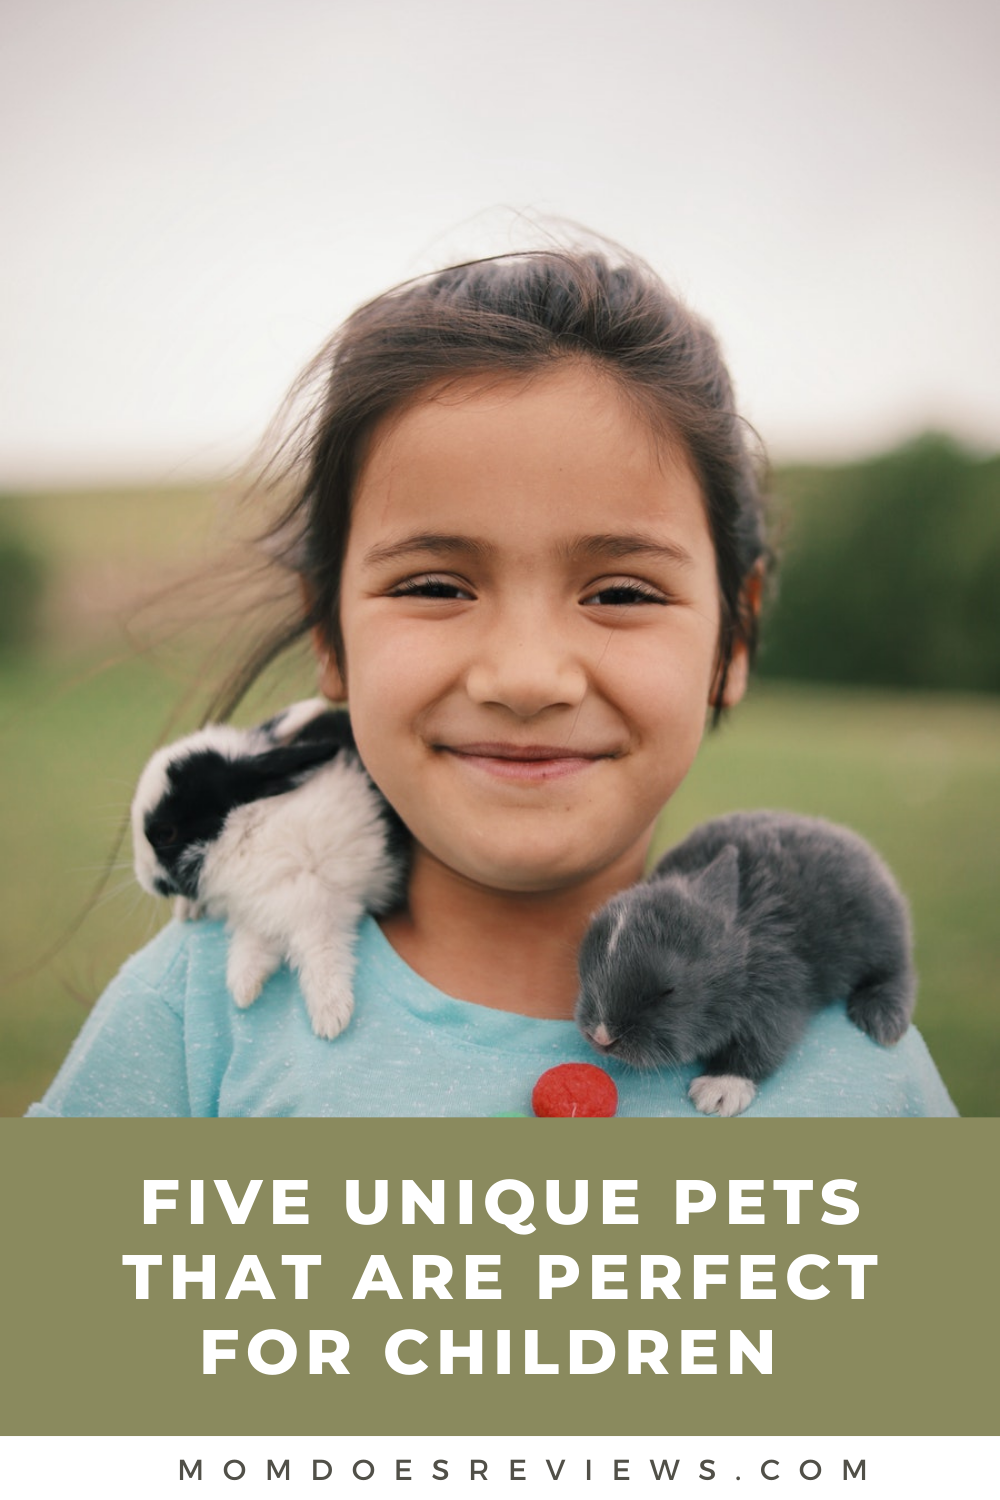 Five Unique Pets that are Perfect for Children